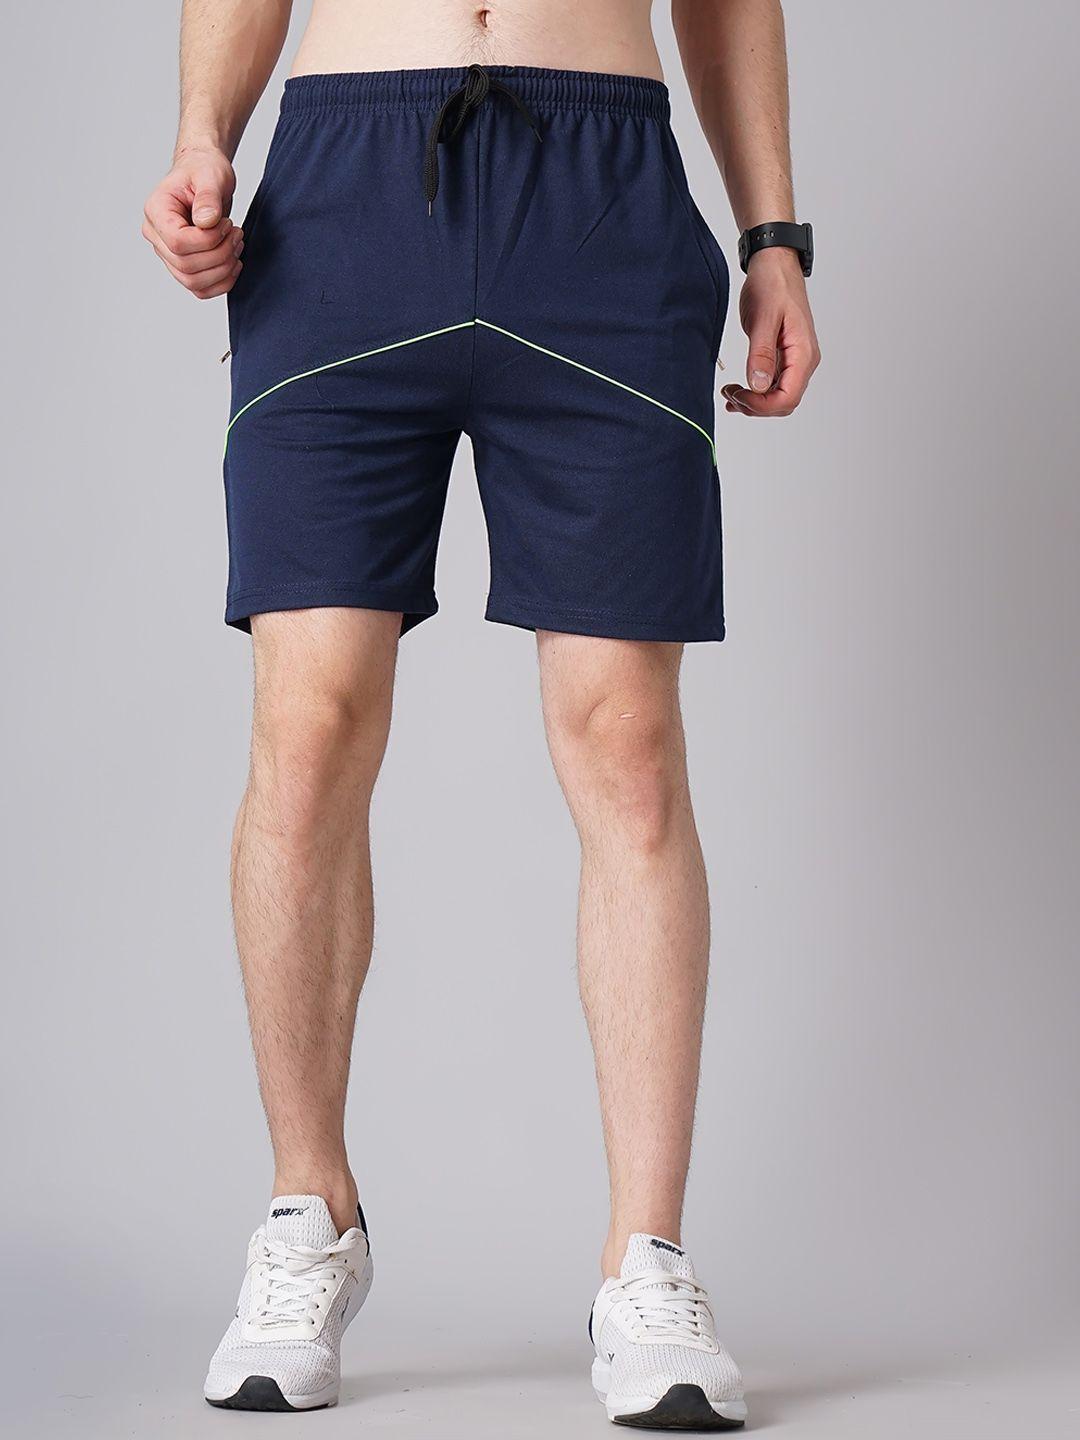 madsto men cotton slim fit sports shorts